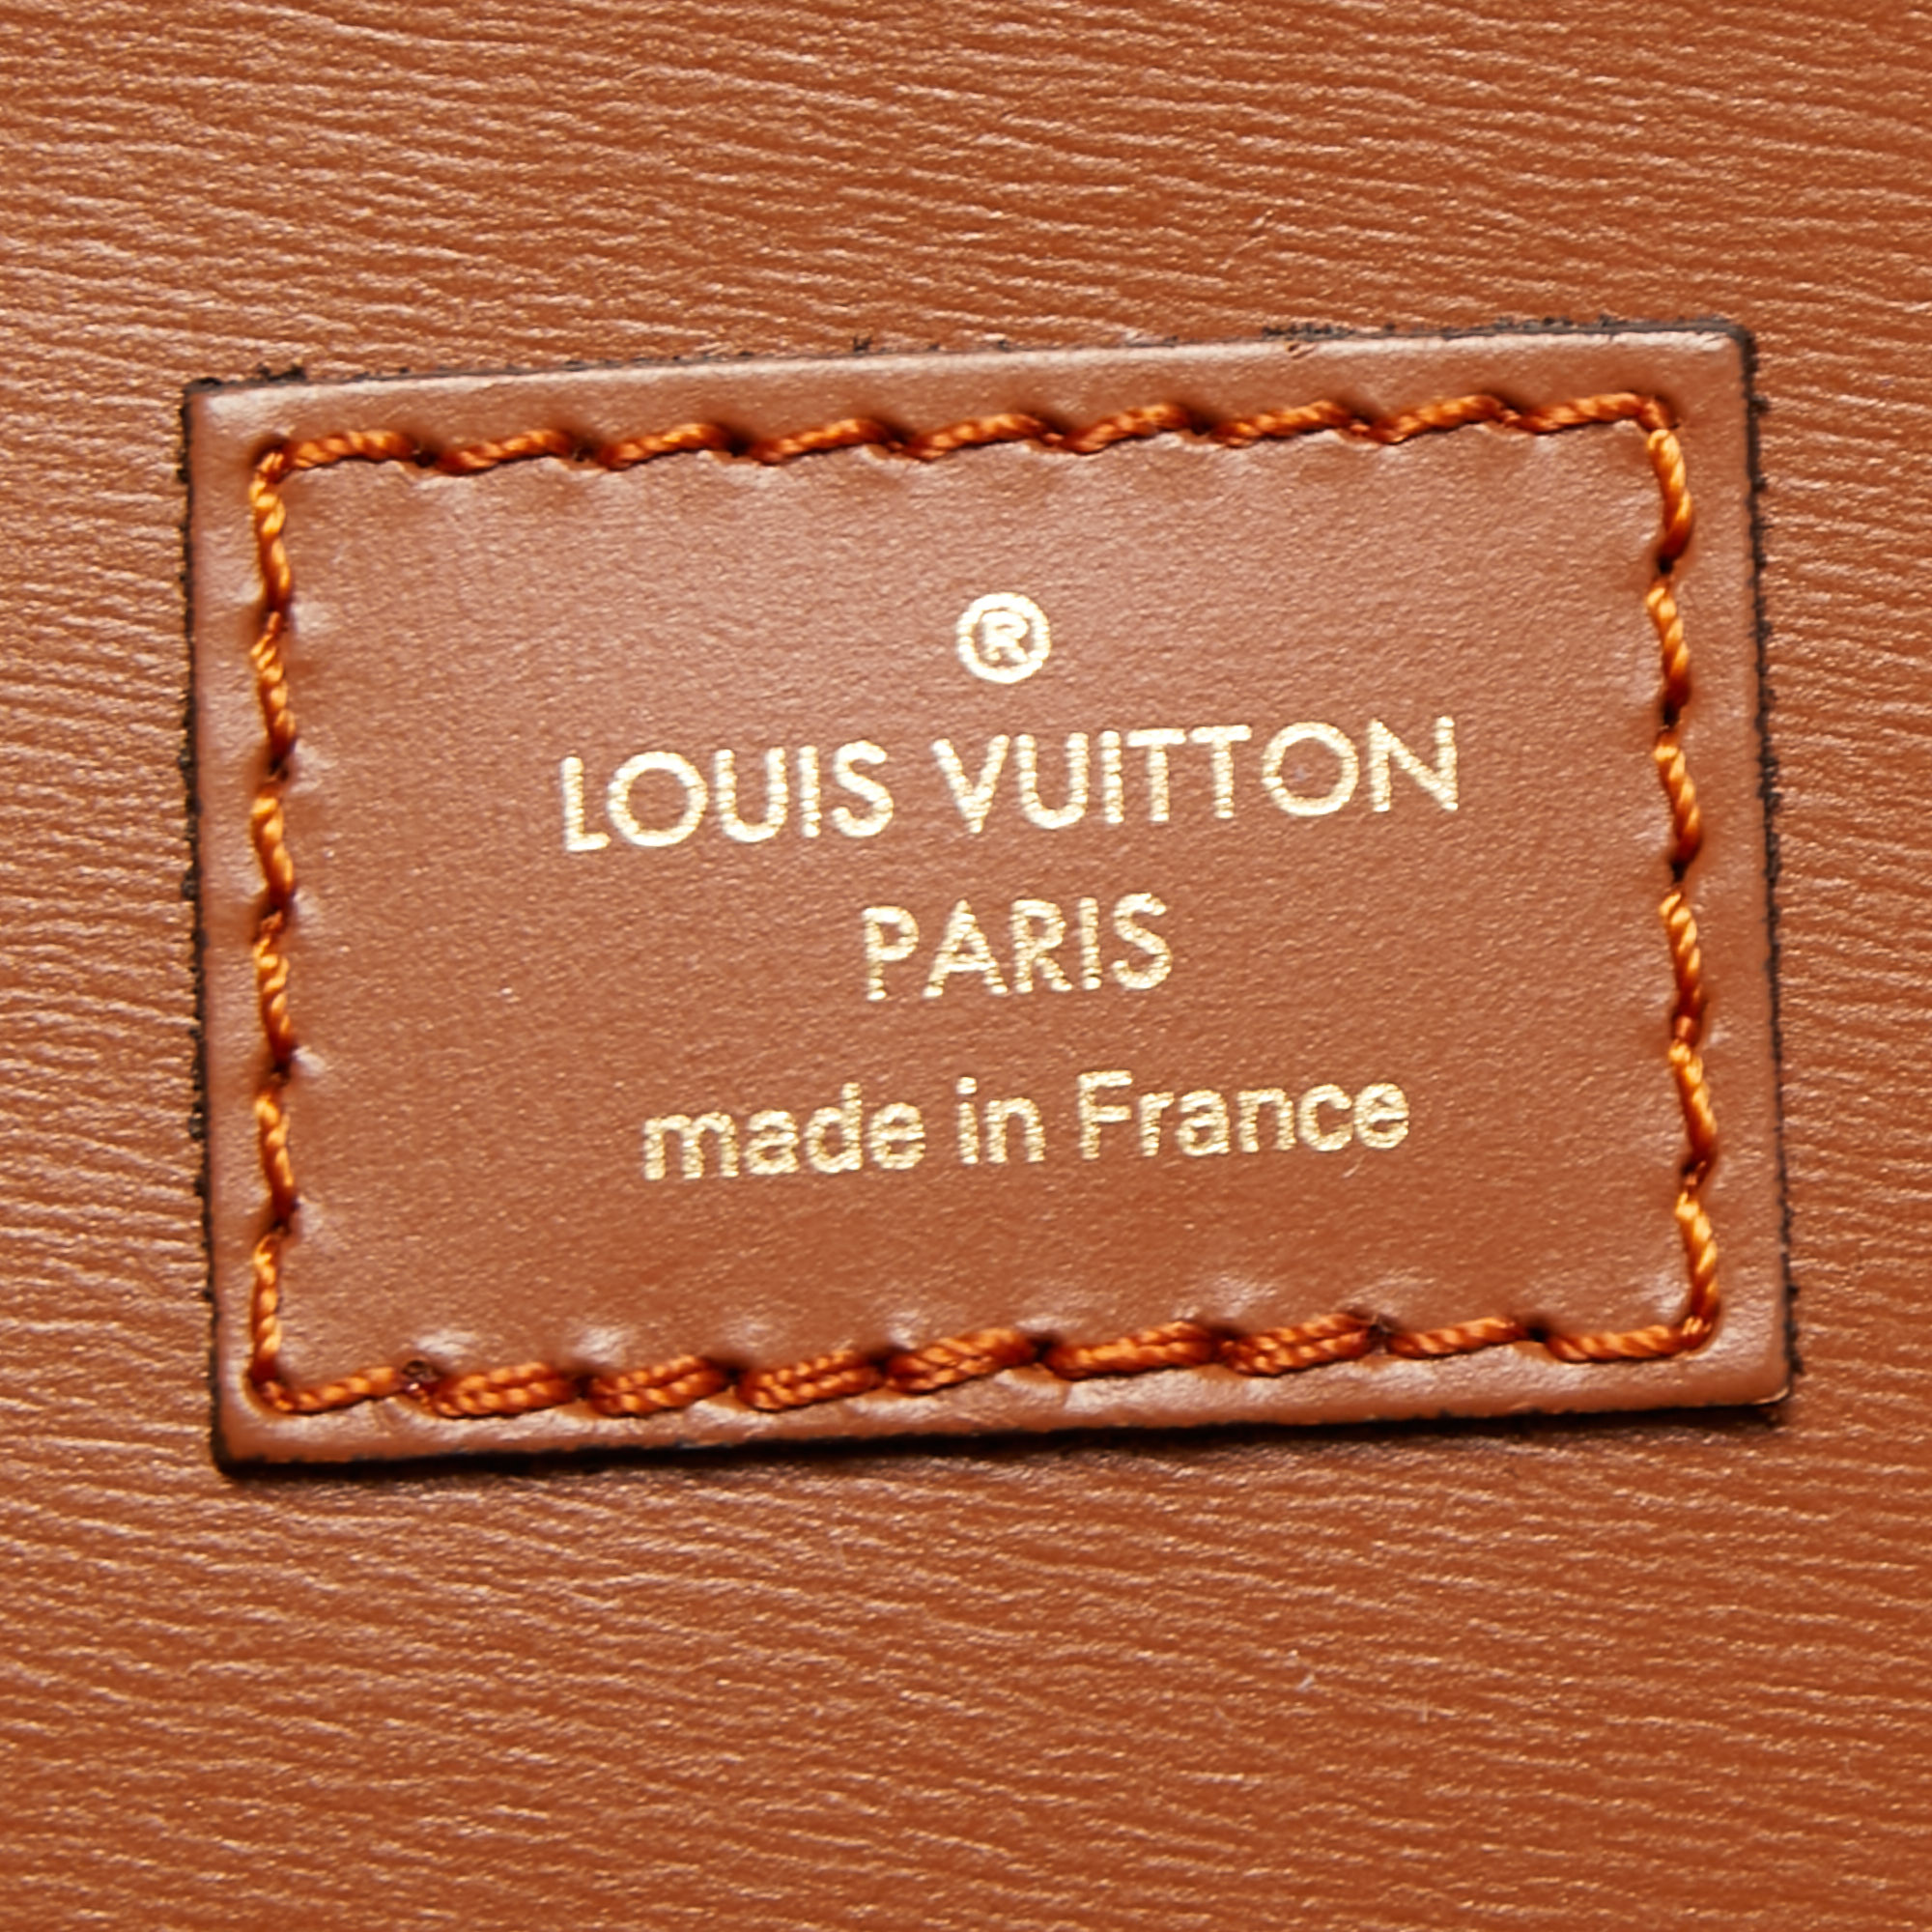 Louis Vuitton X Grace Coddington Bag - Prestige Online Store - Luxury Items  with Exceptional Savings from the eShop